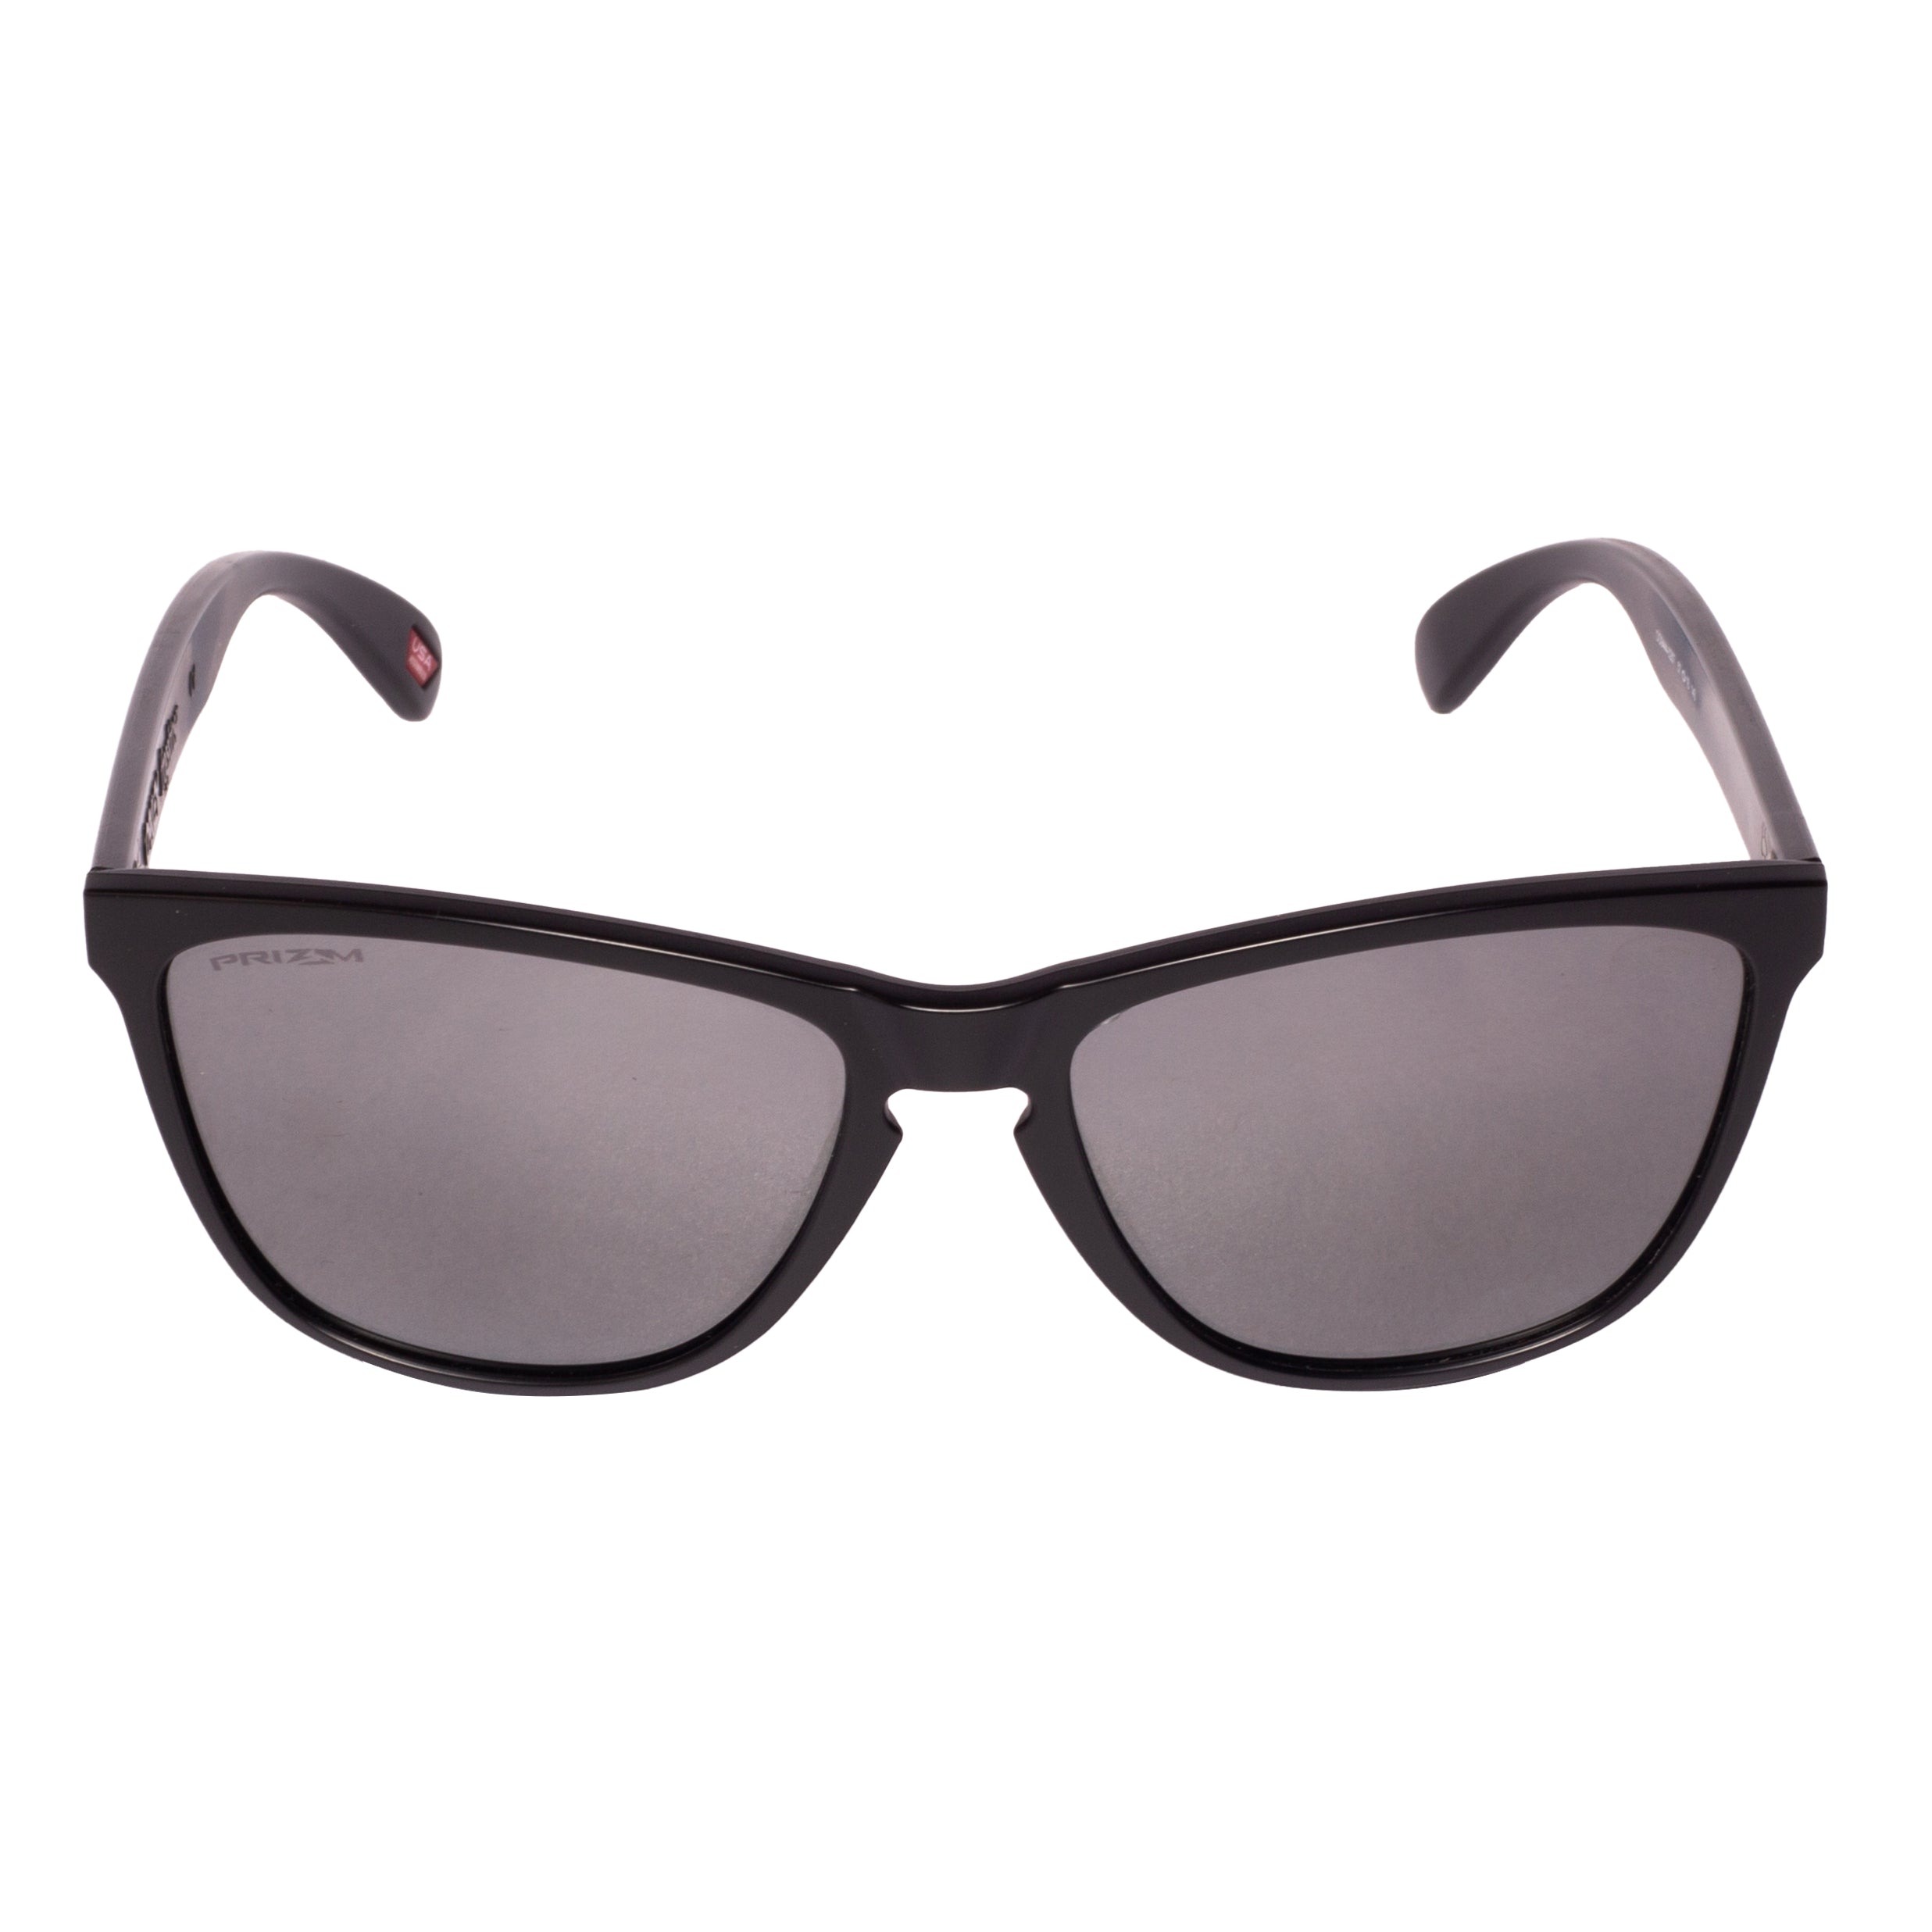 Oakley-9444-57-944402 Sunglasses - Premium Sunglasses from Oakley - Just Rs. 7790! Shop now at Laxmi Opticians